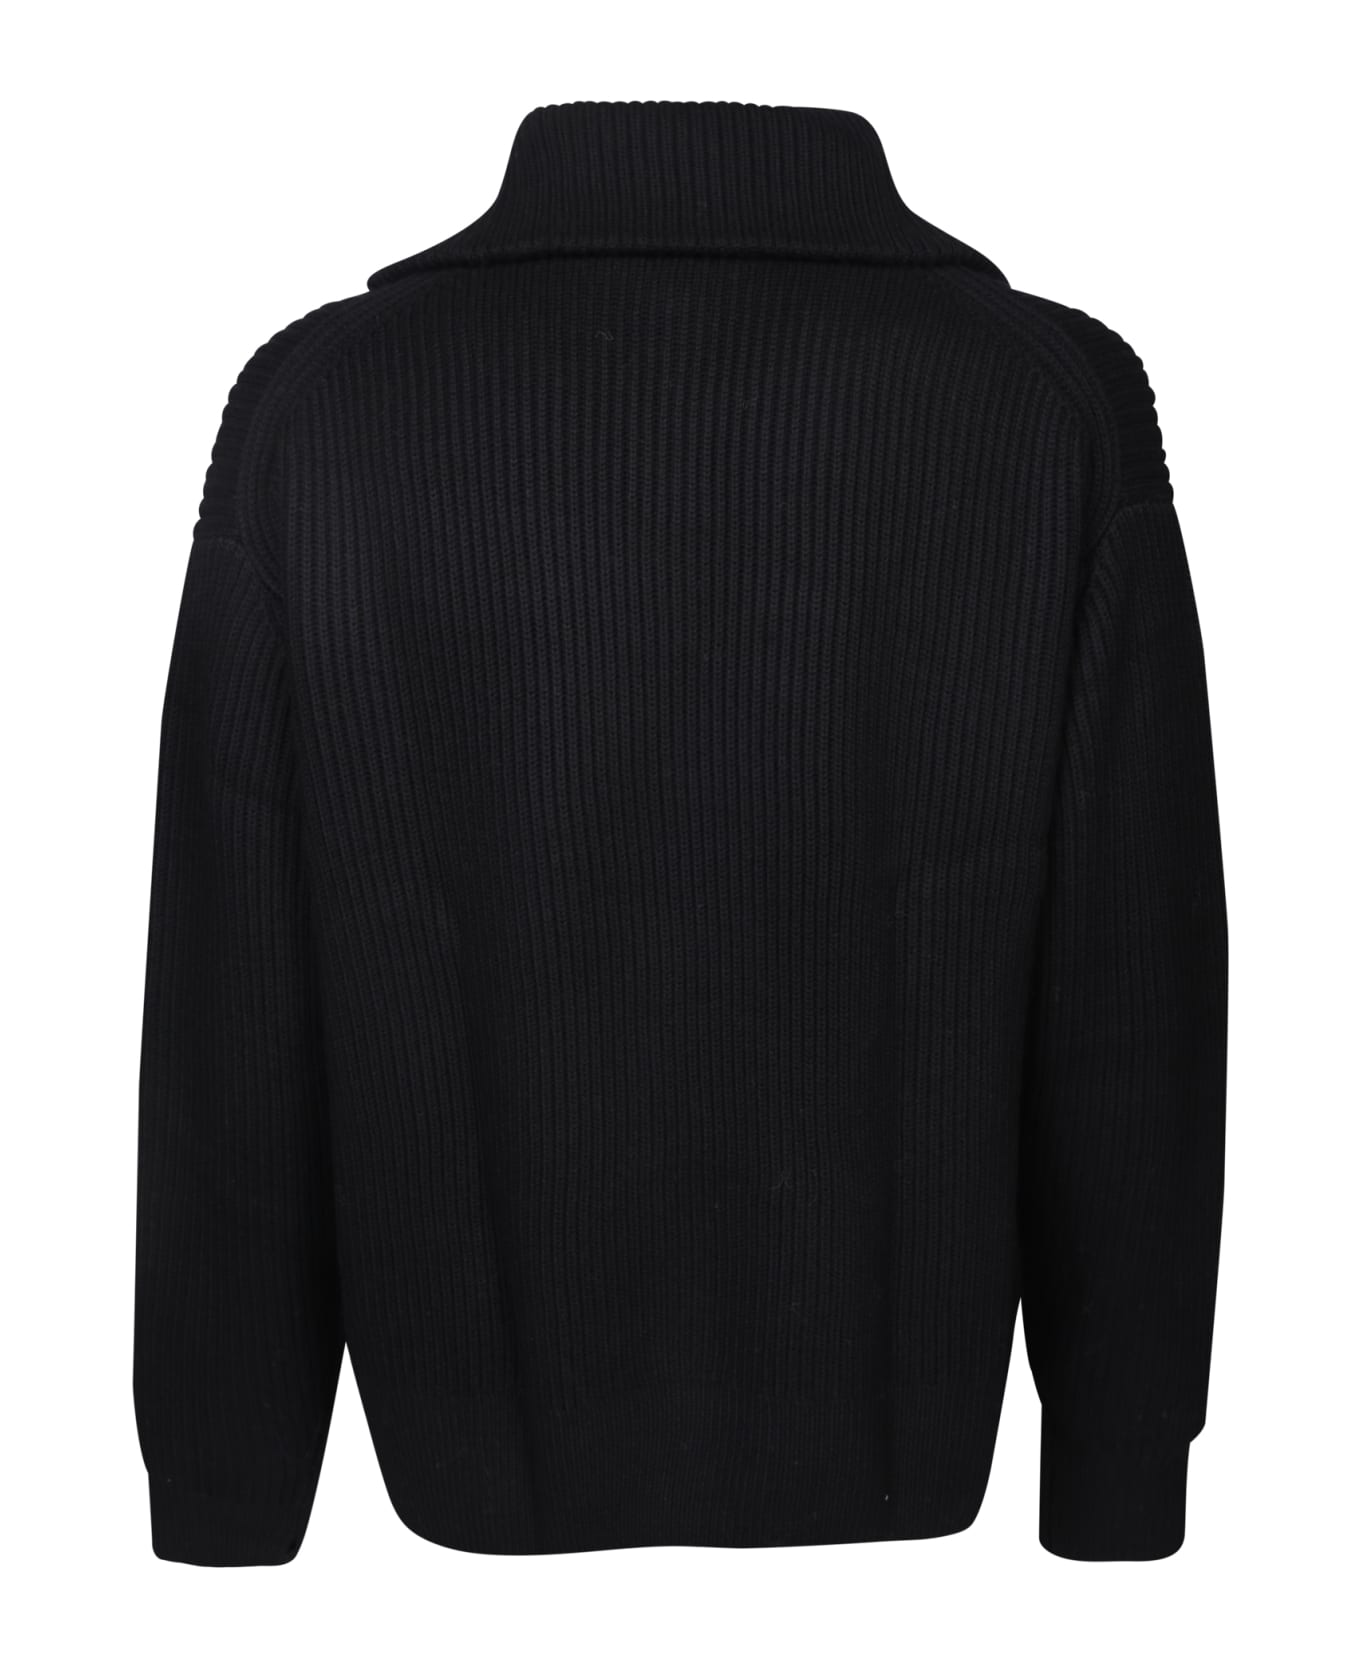 Studio Nicholson Bow Black Pullover Polo Shirt - Black